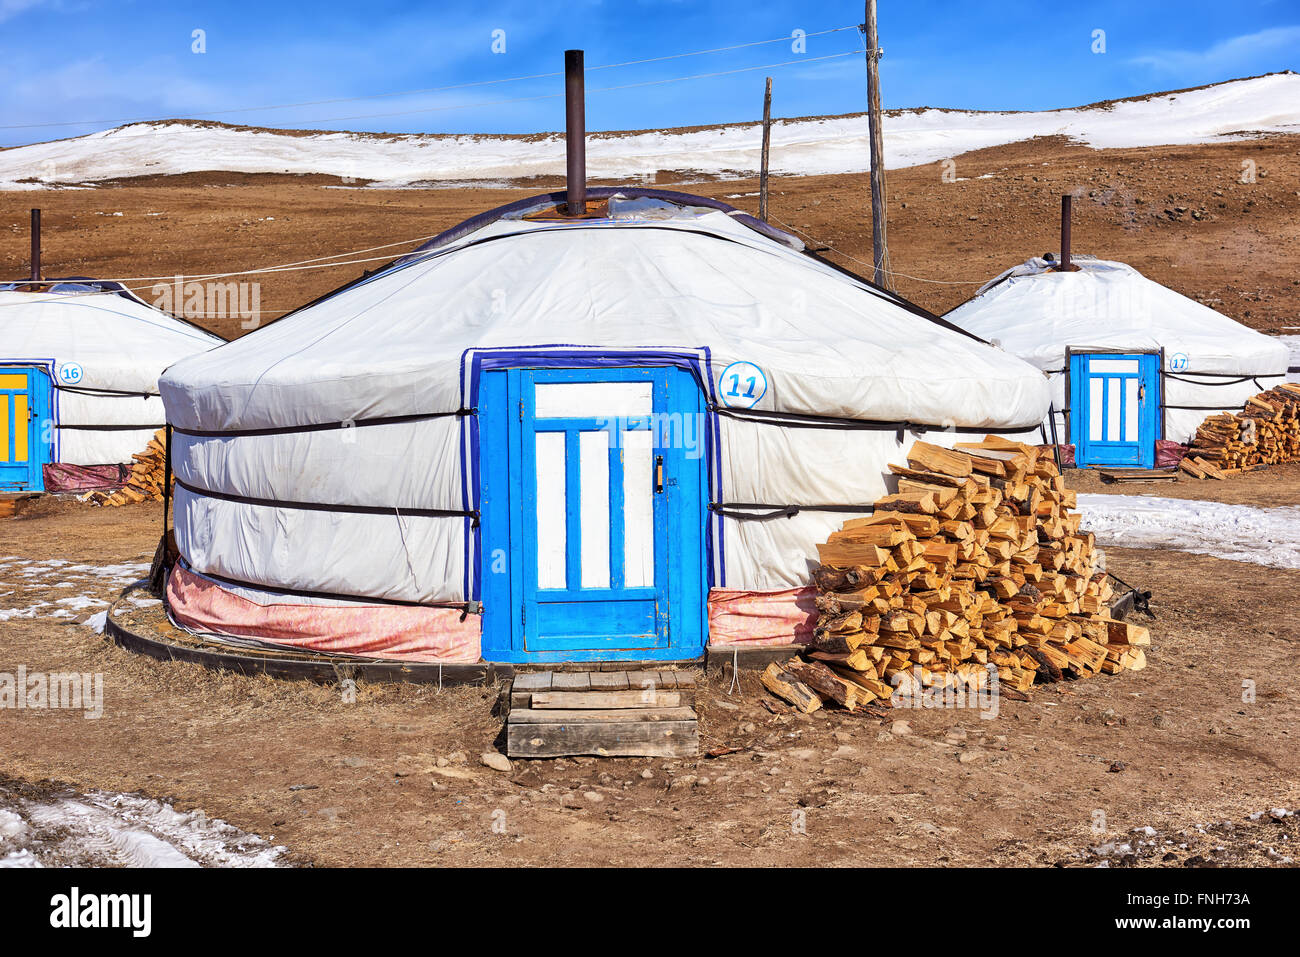 Yourte Mongole (ger) - habitation moderne des nomades de l'Asie centrale Banque D'Images